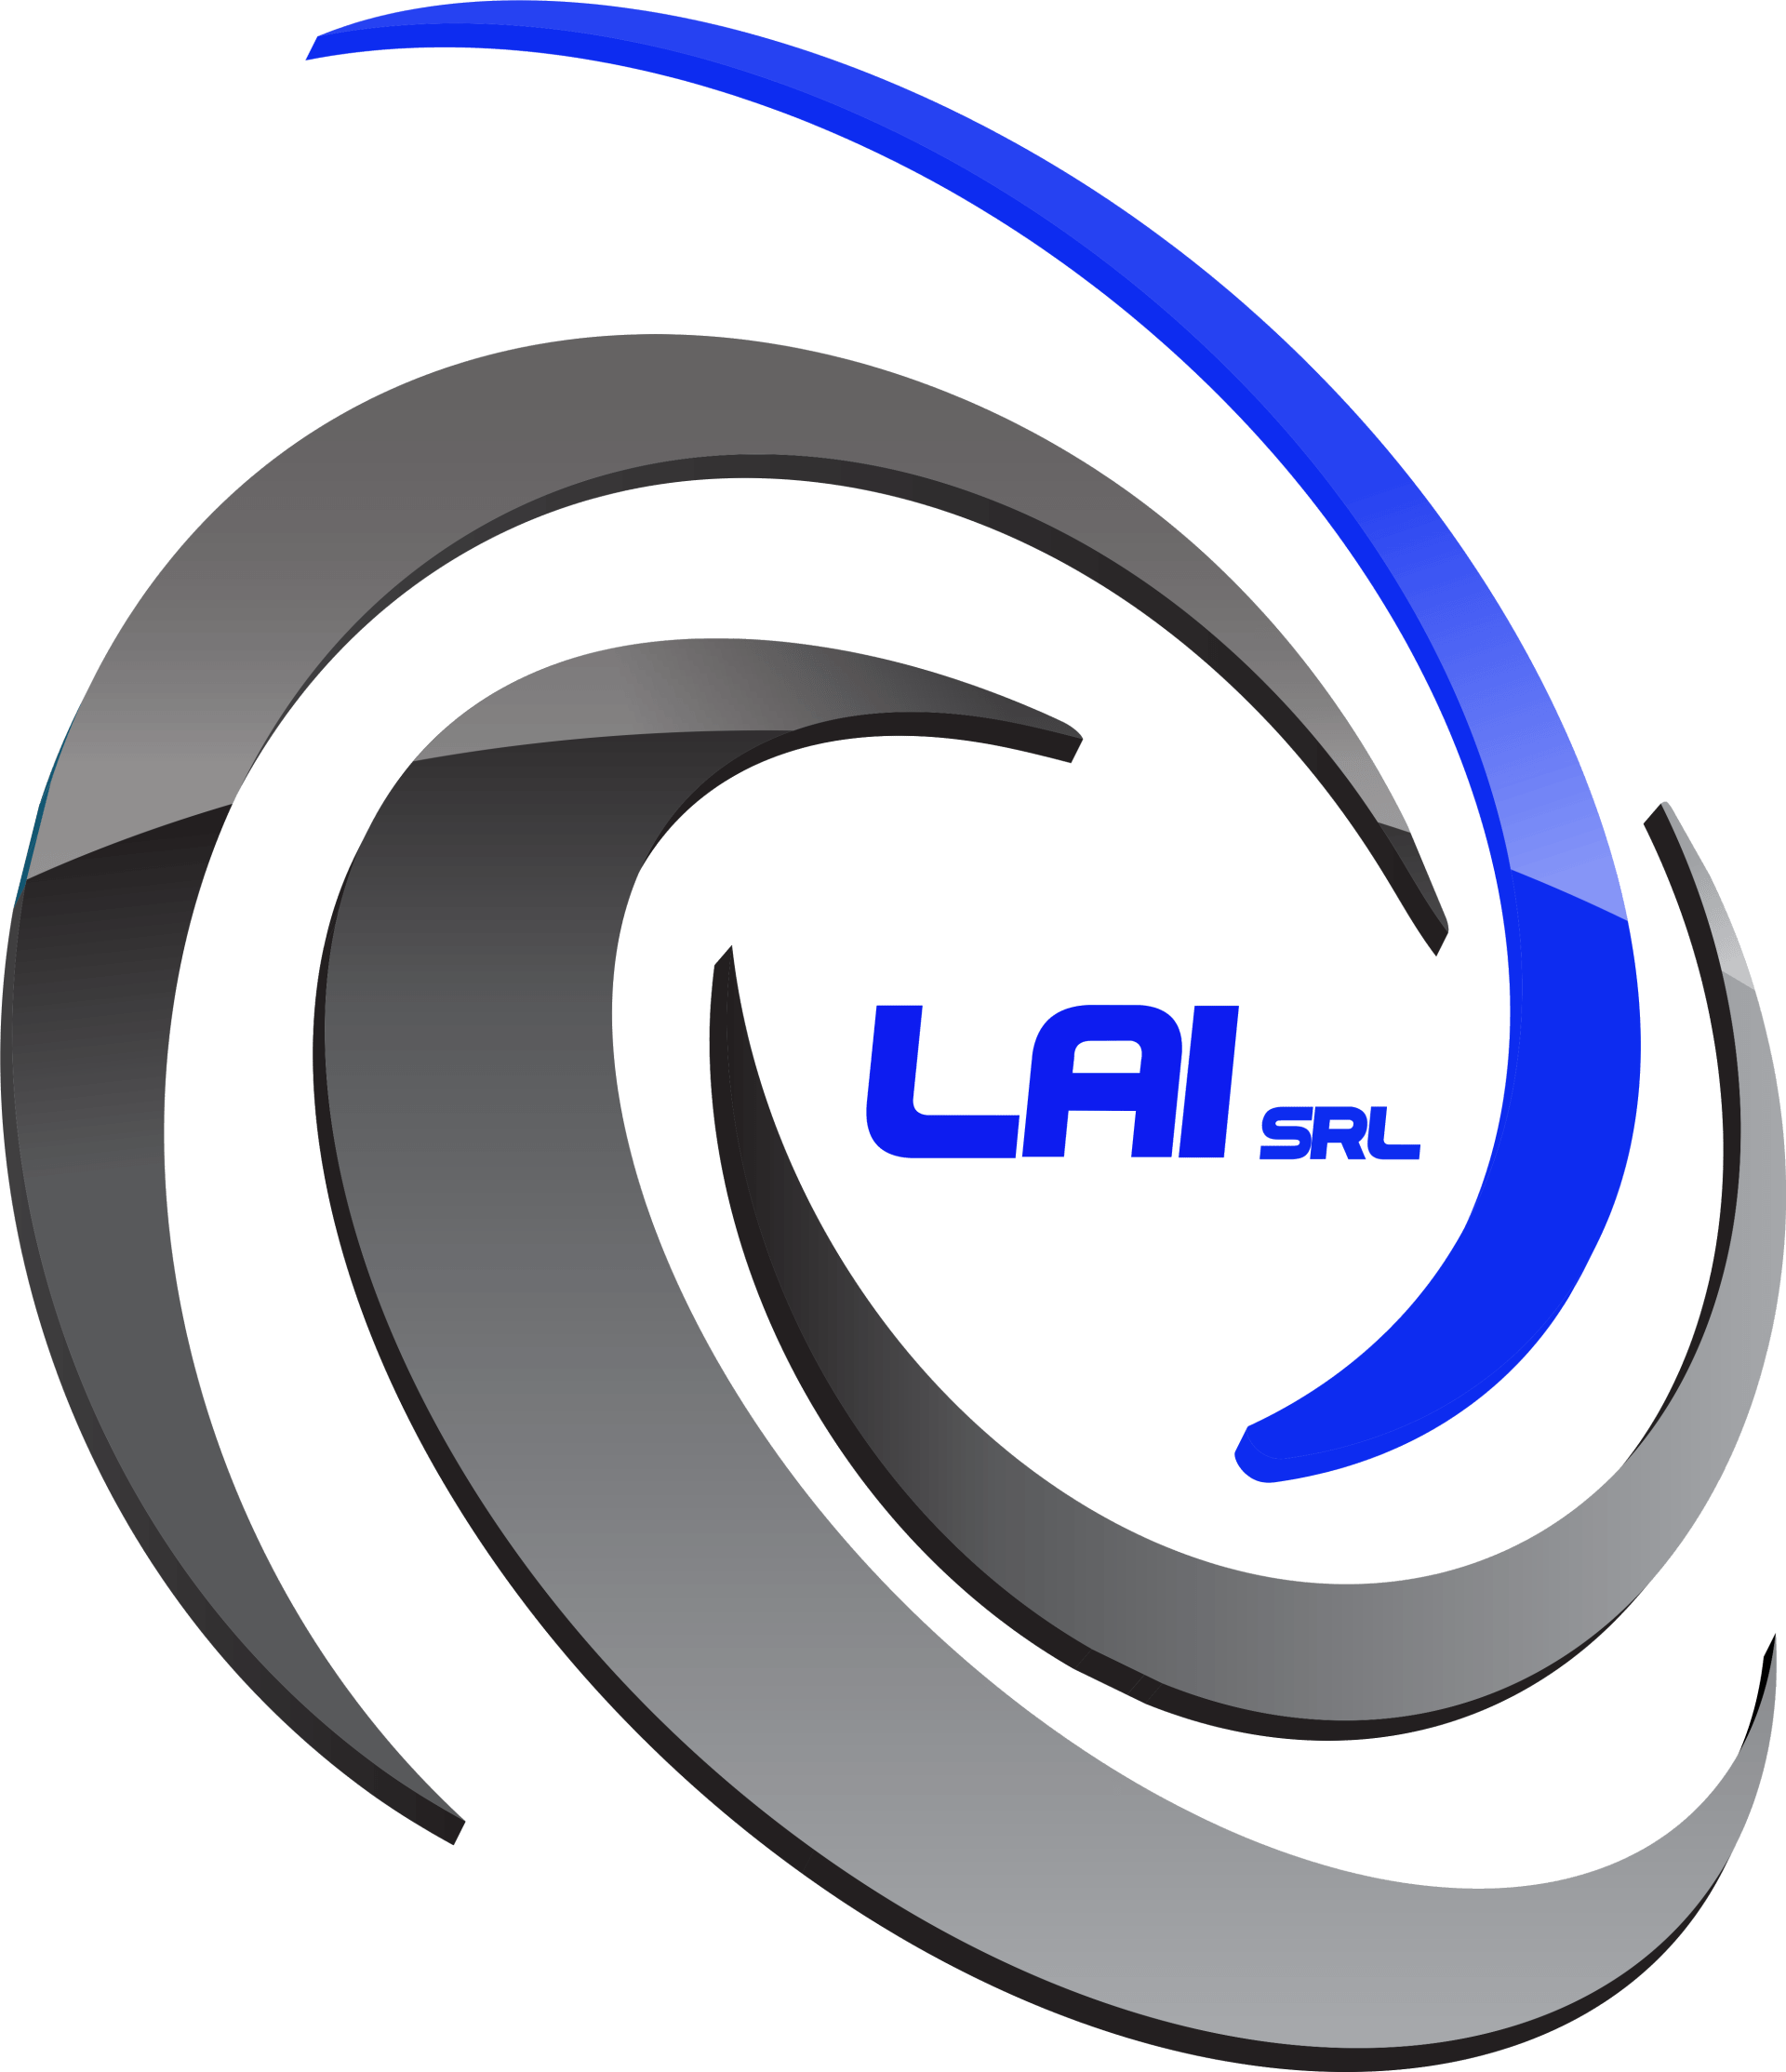 LAI-Logo